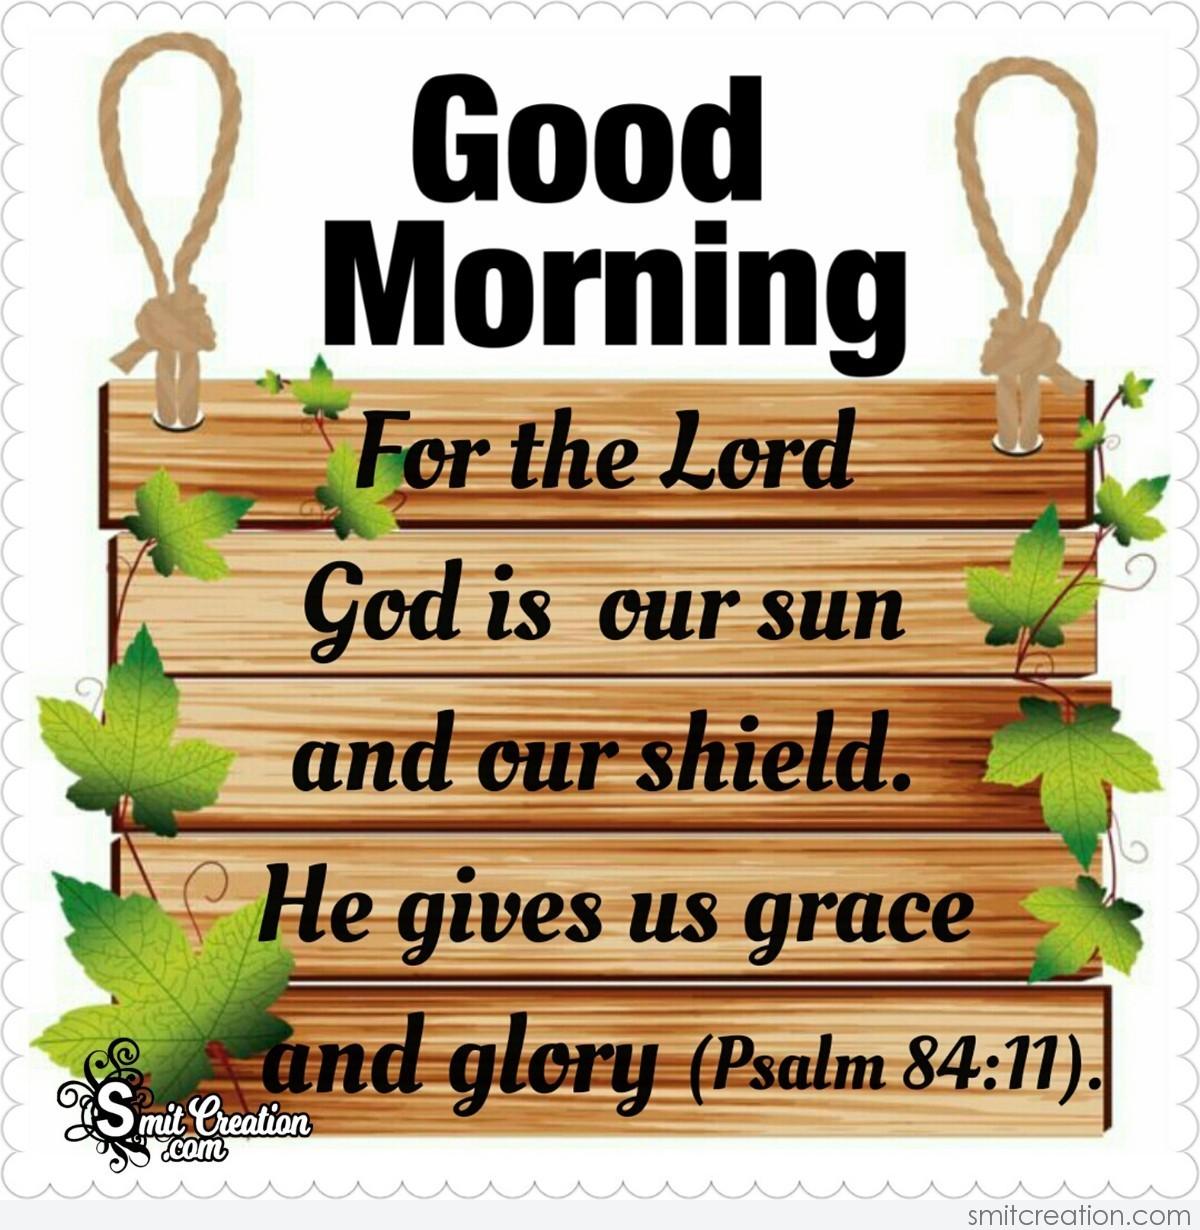 Good Morning God Is Our Sun - SmitCreation.com